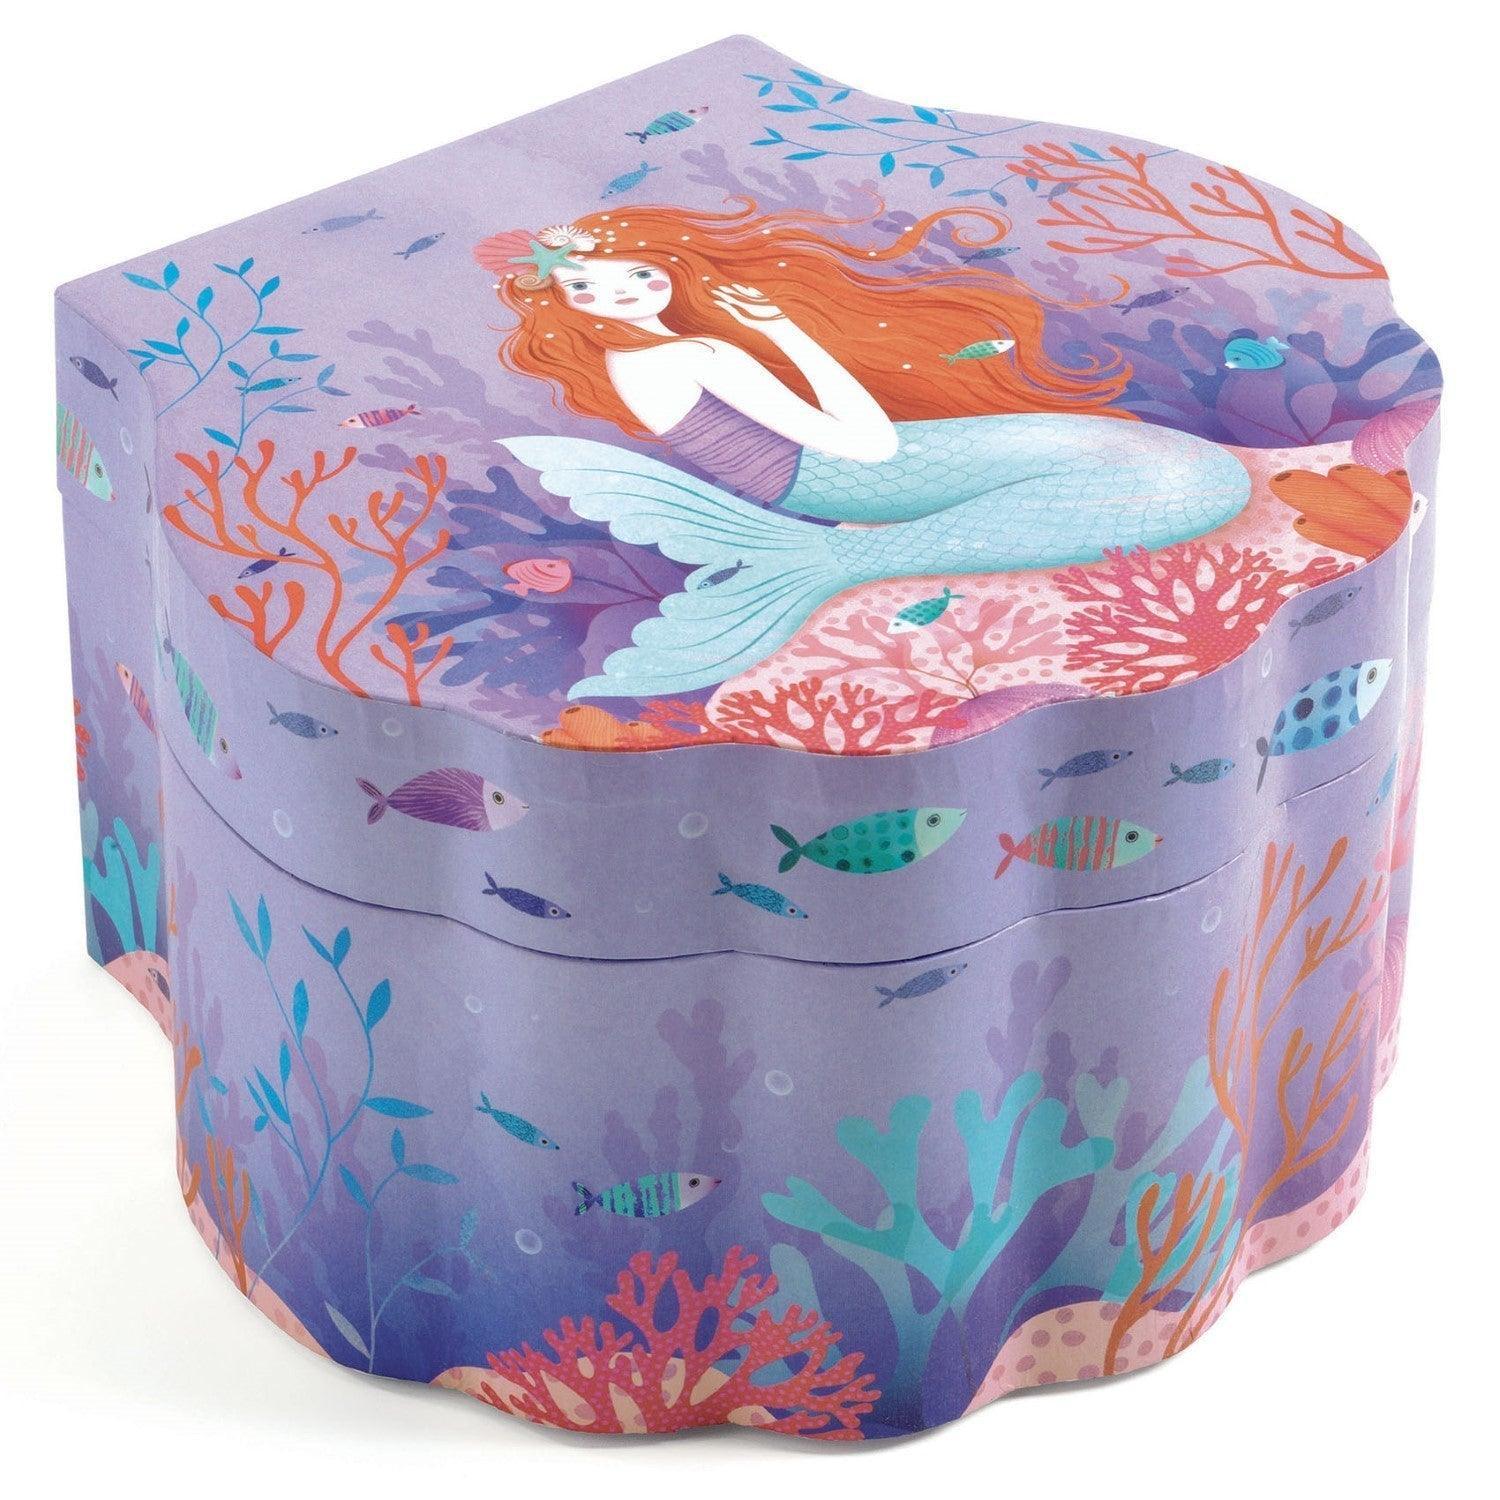 Djeco Enchanted Mermaid Musical Treasure Box - Why and Whale